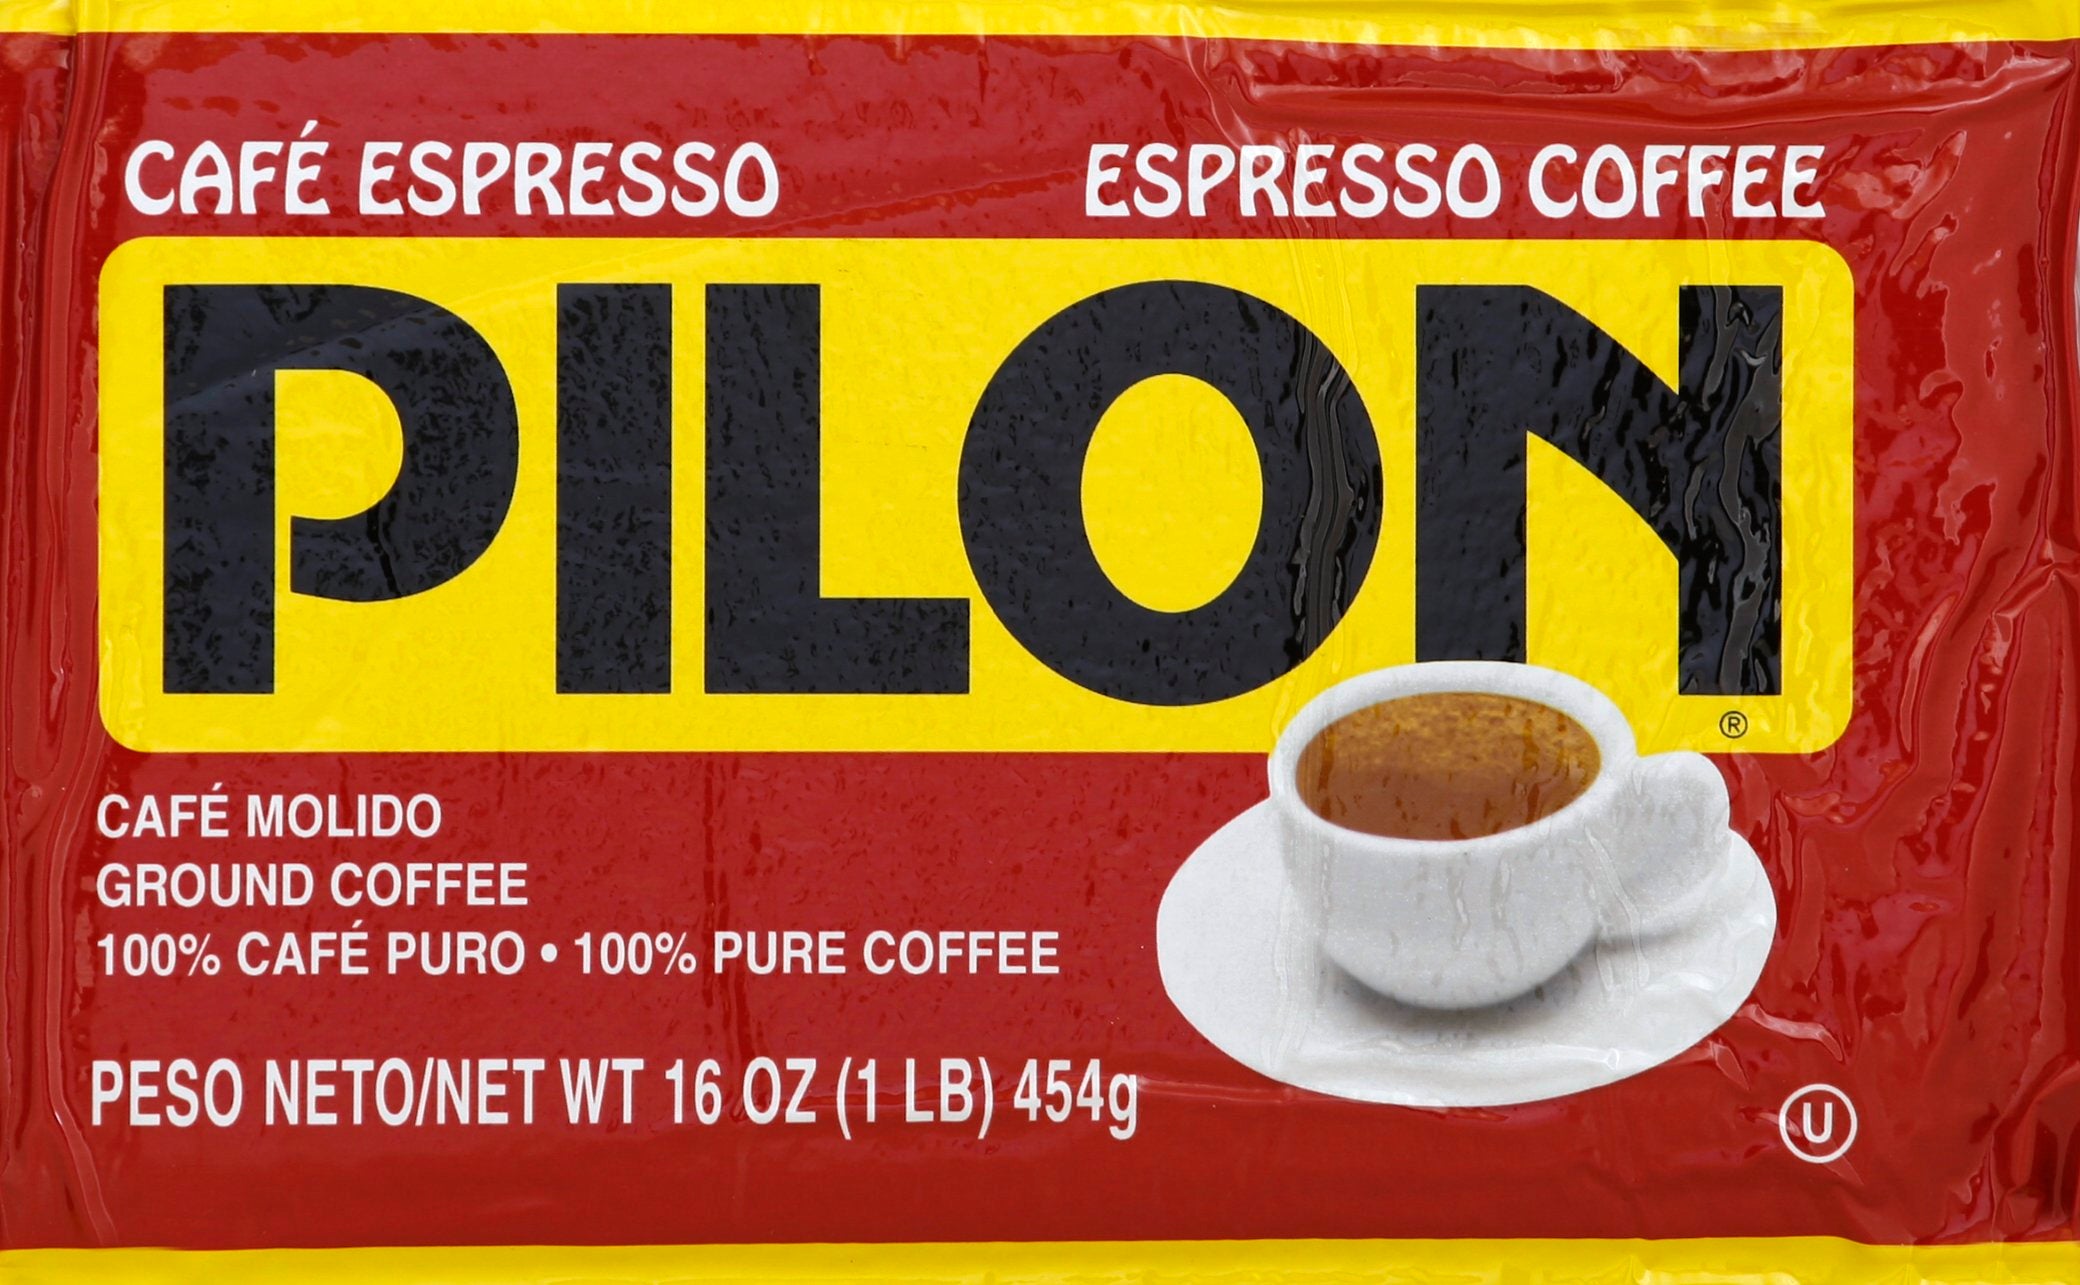 Cafe Pilon Espresso, Ground Coffee Brick